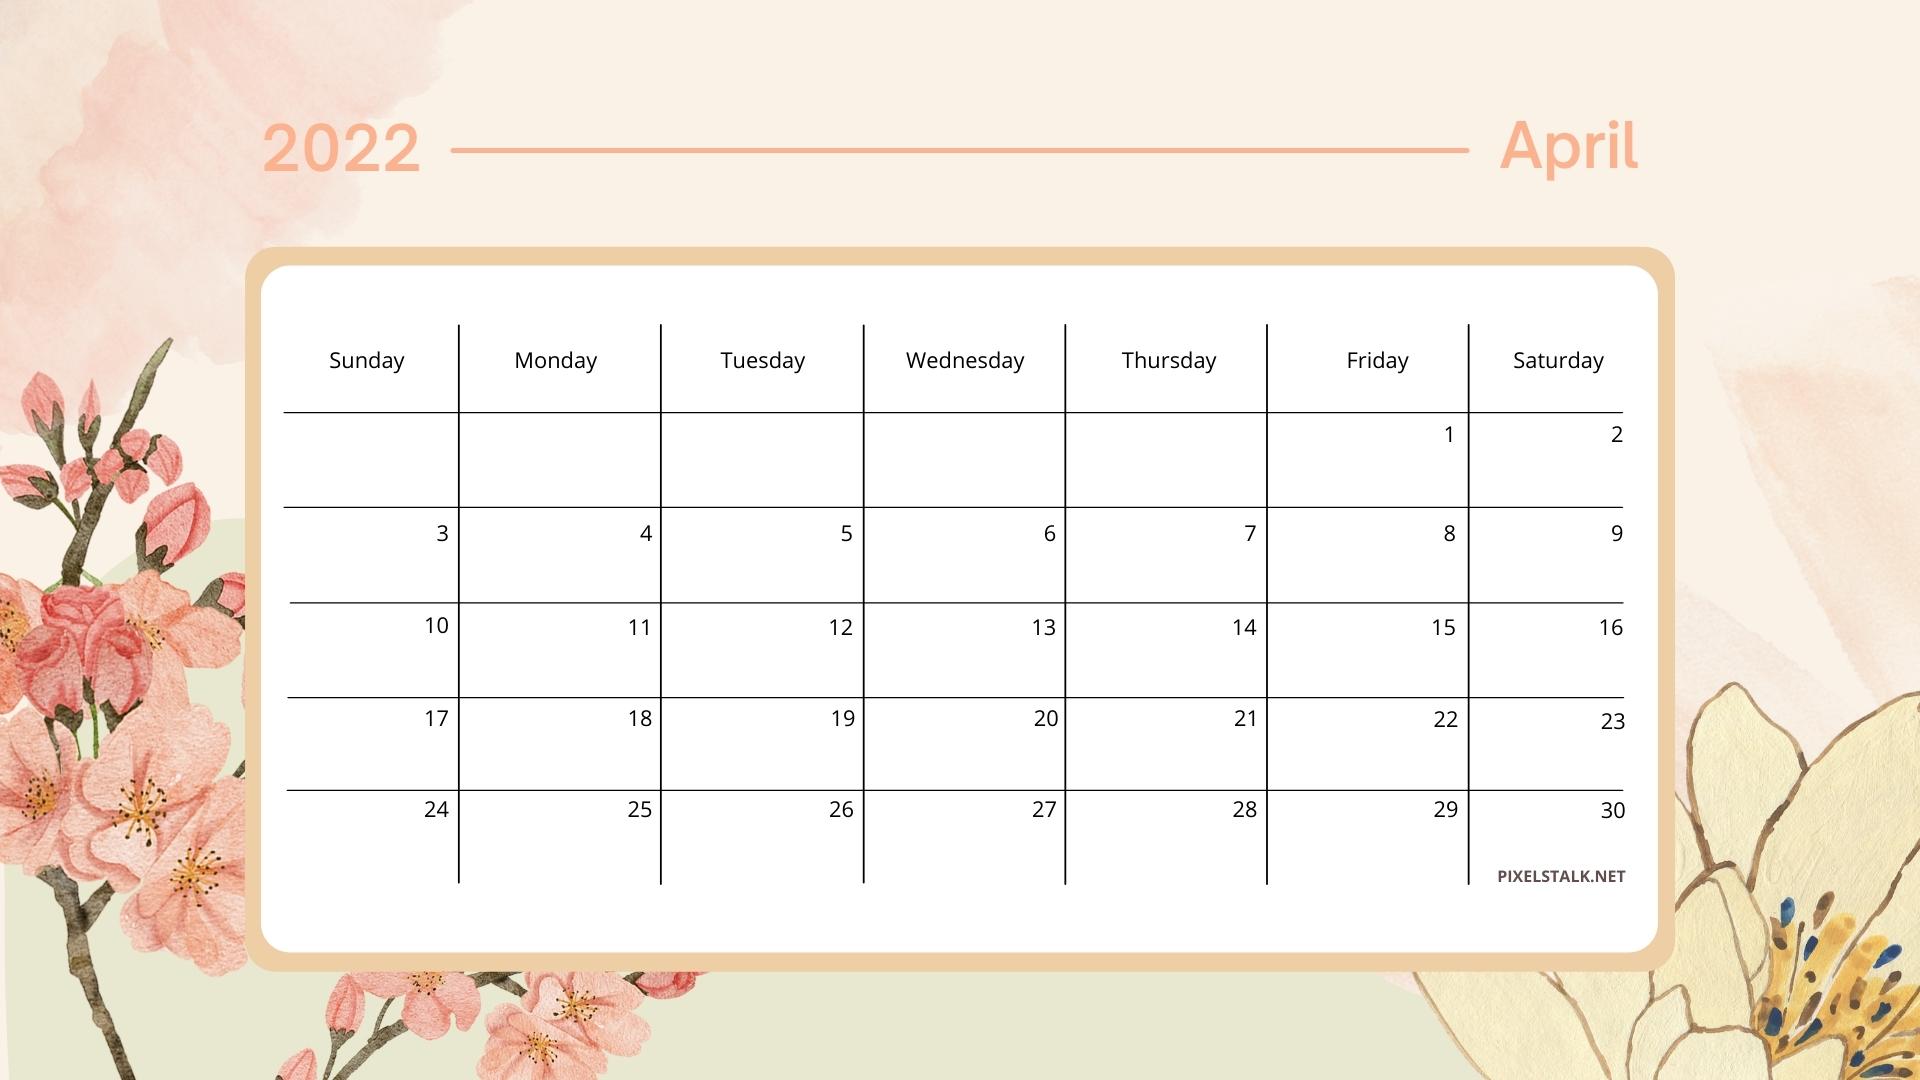 April 2022 Calendar Backgrounds HD Free download 